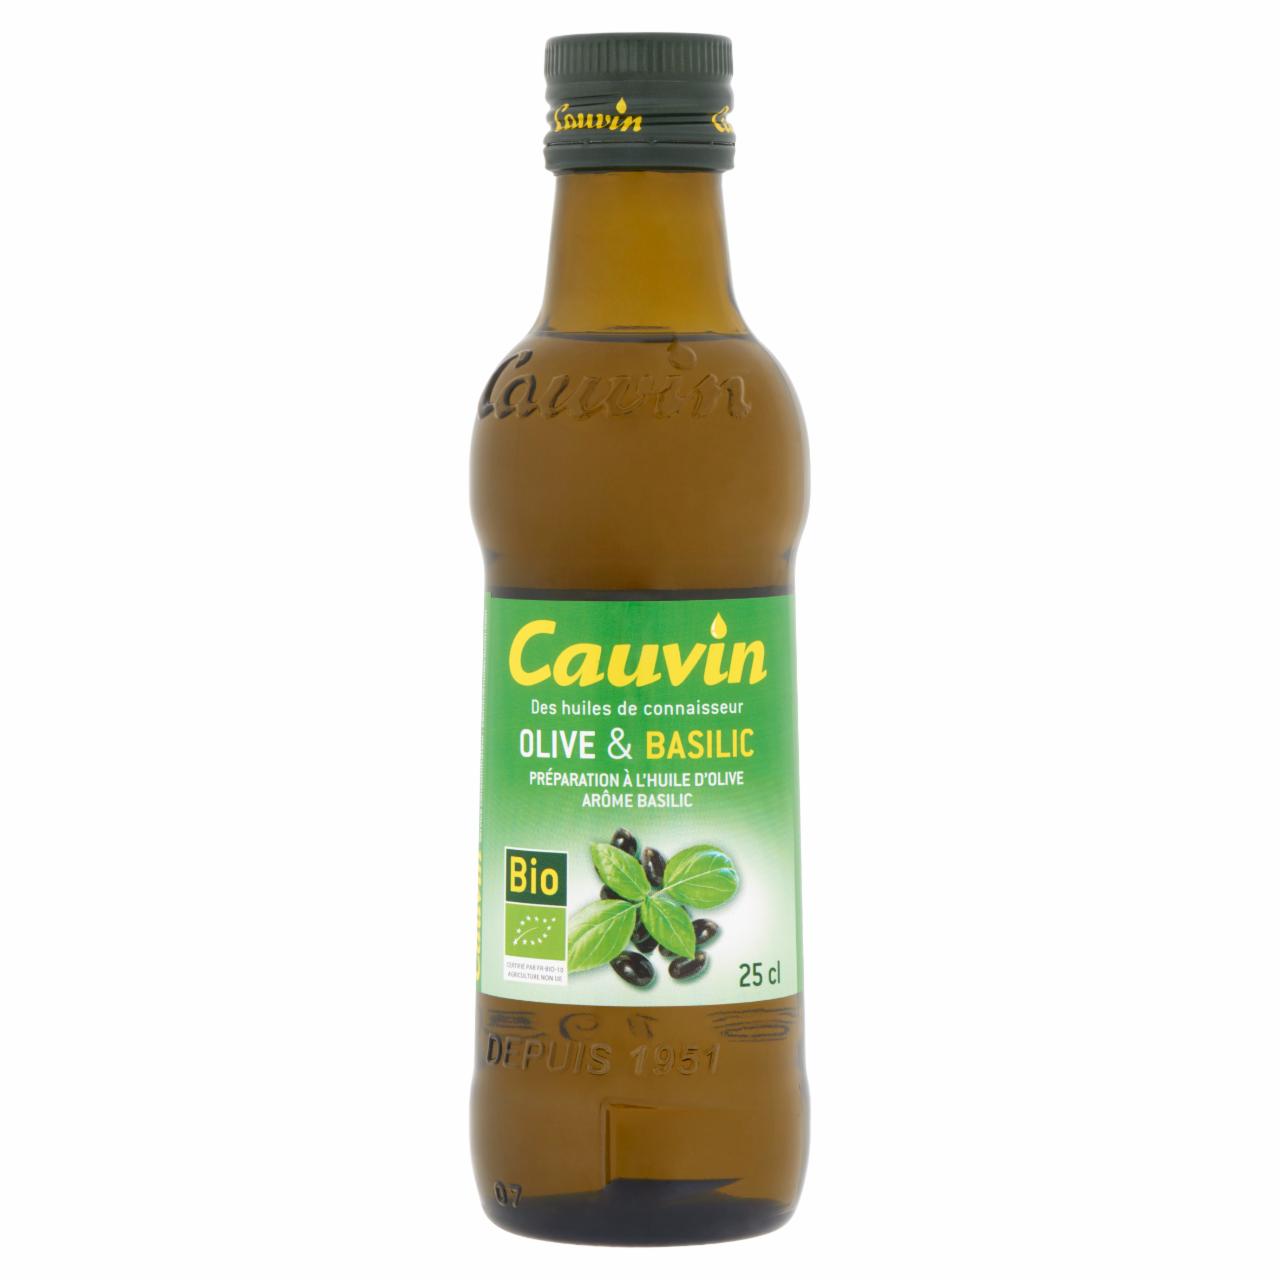 Képek - Cauvin bazsalikom ízű extra szűz BIO olívaolaj 25 cl